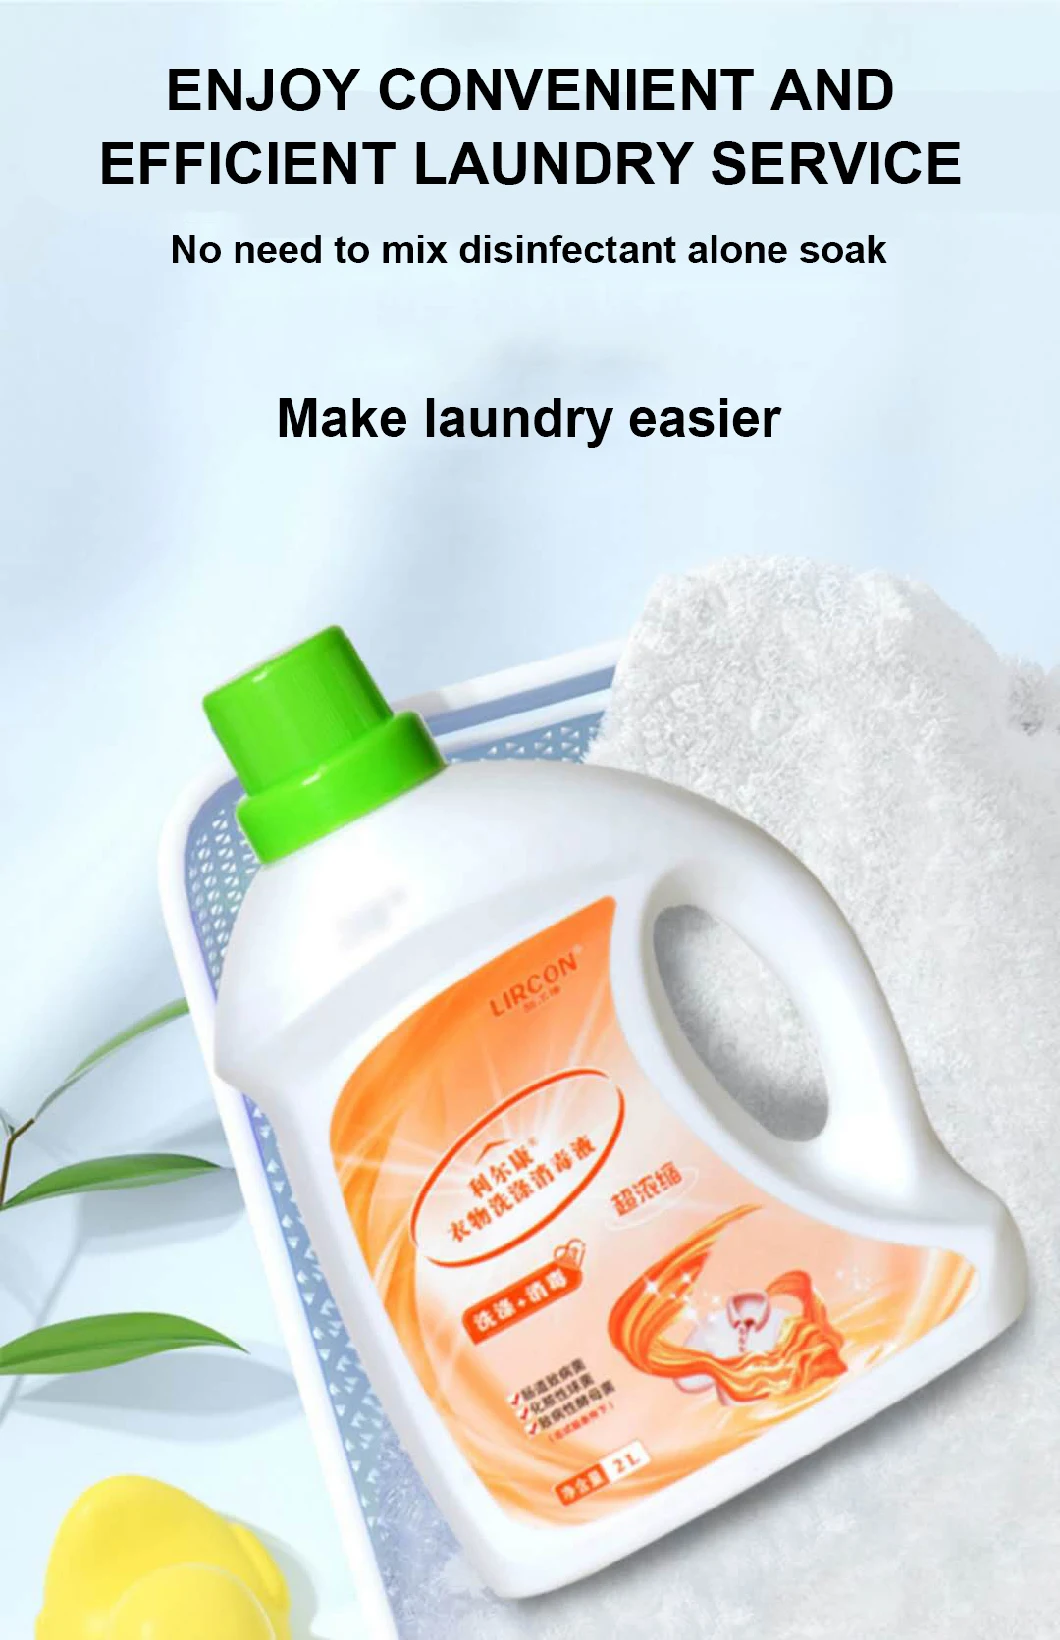 OEM Organic Cleaning Bottle Bulk Liquid Laundry Detergent